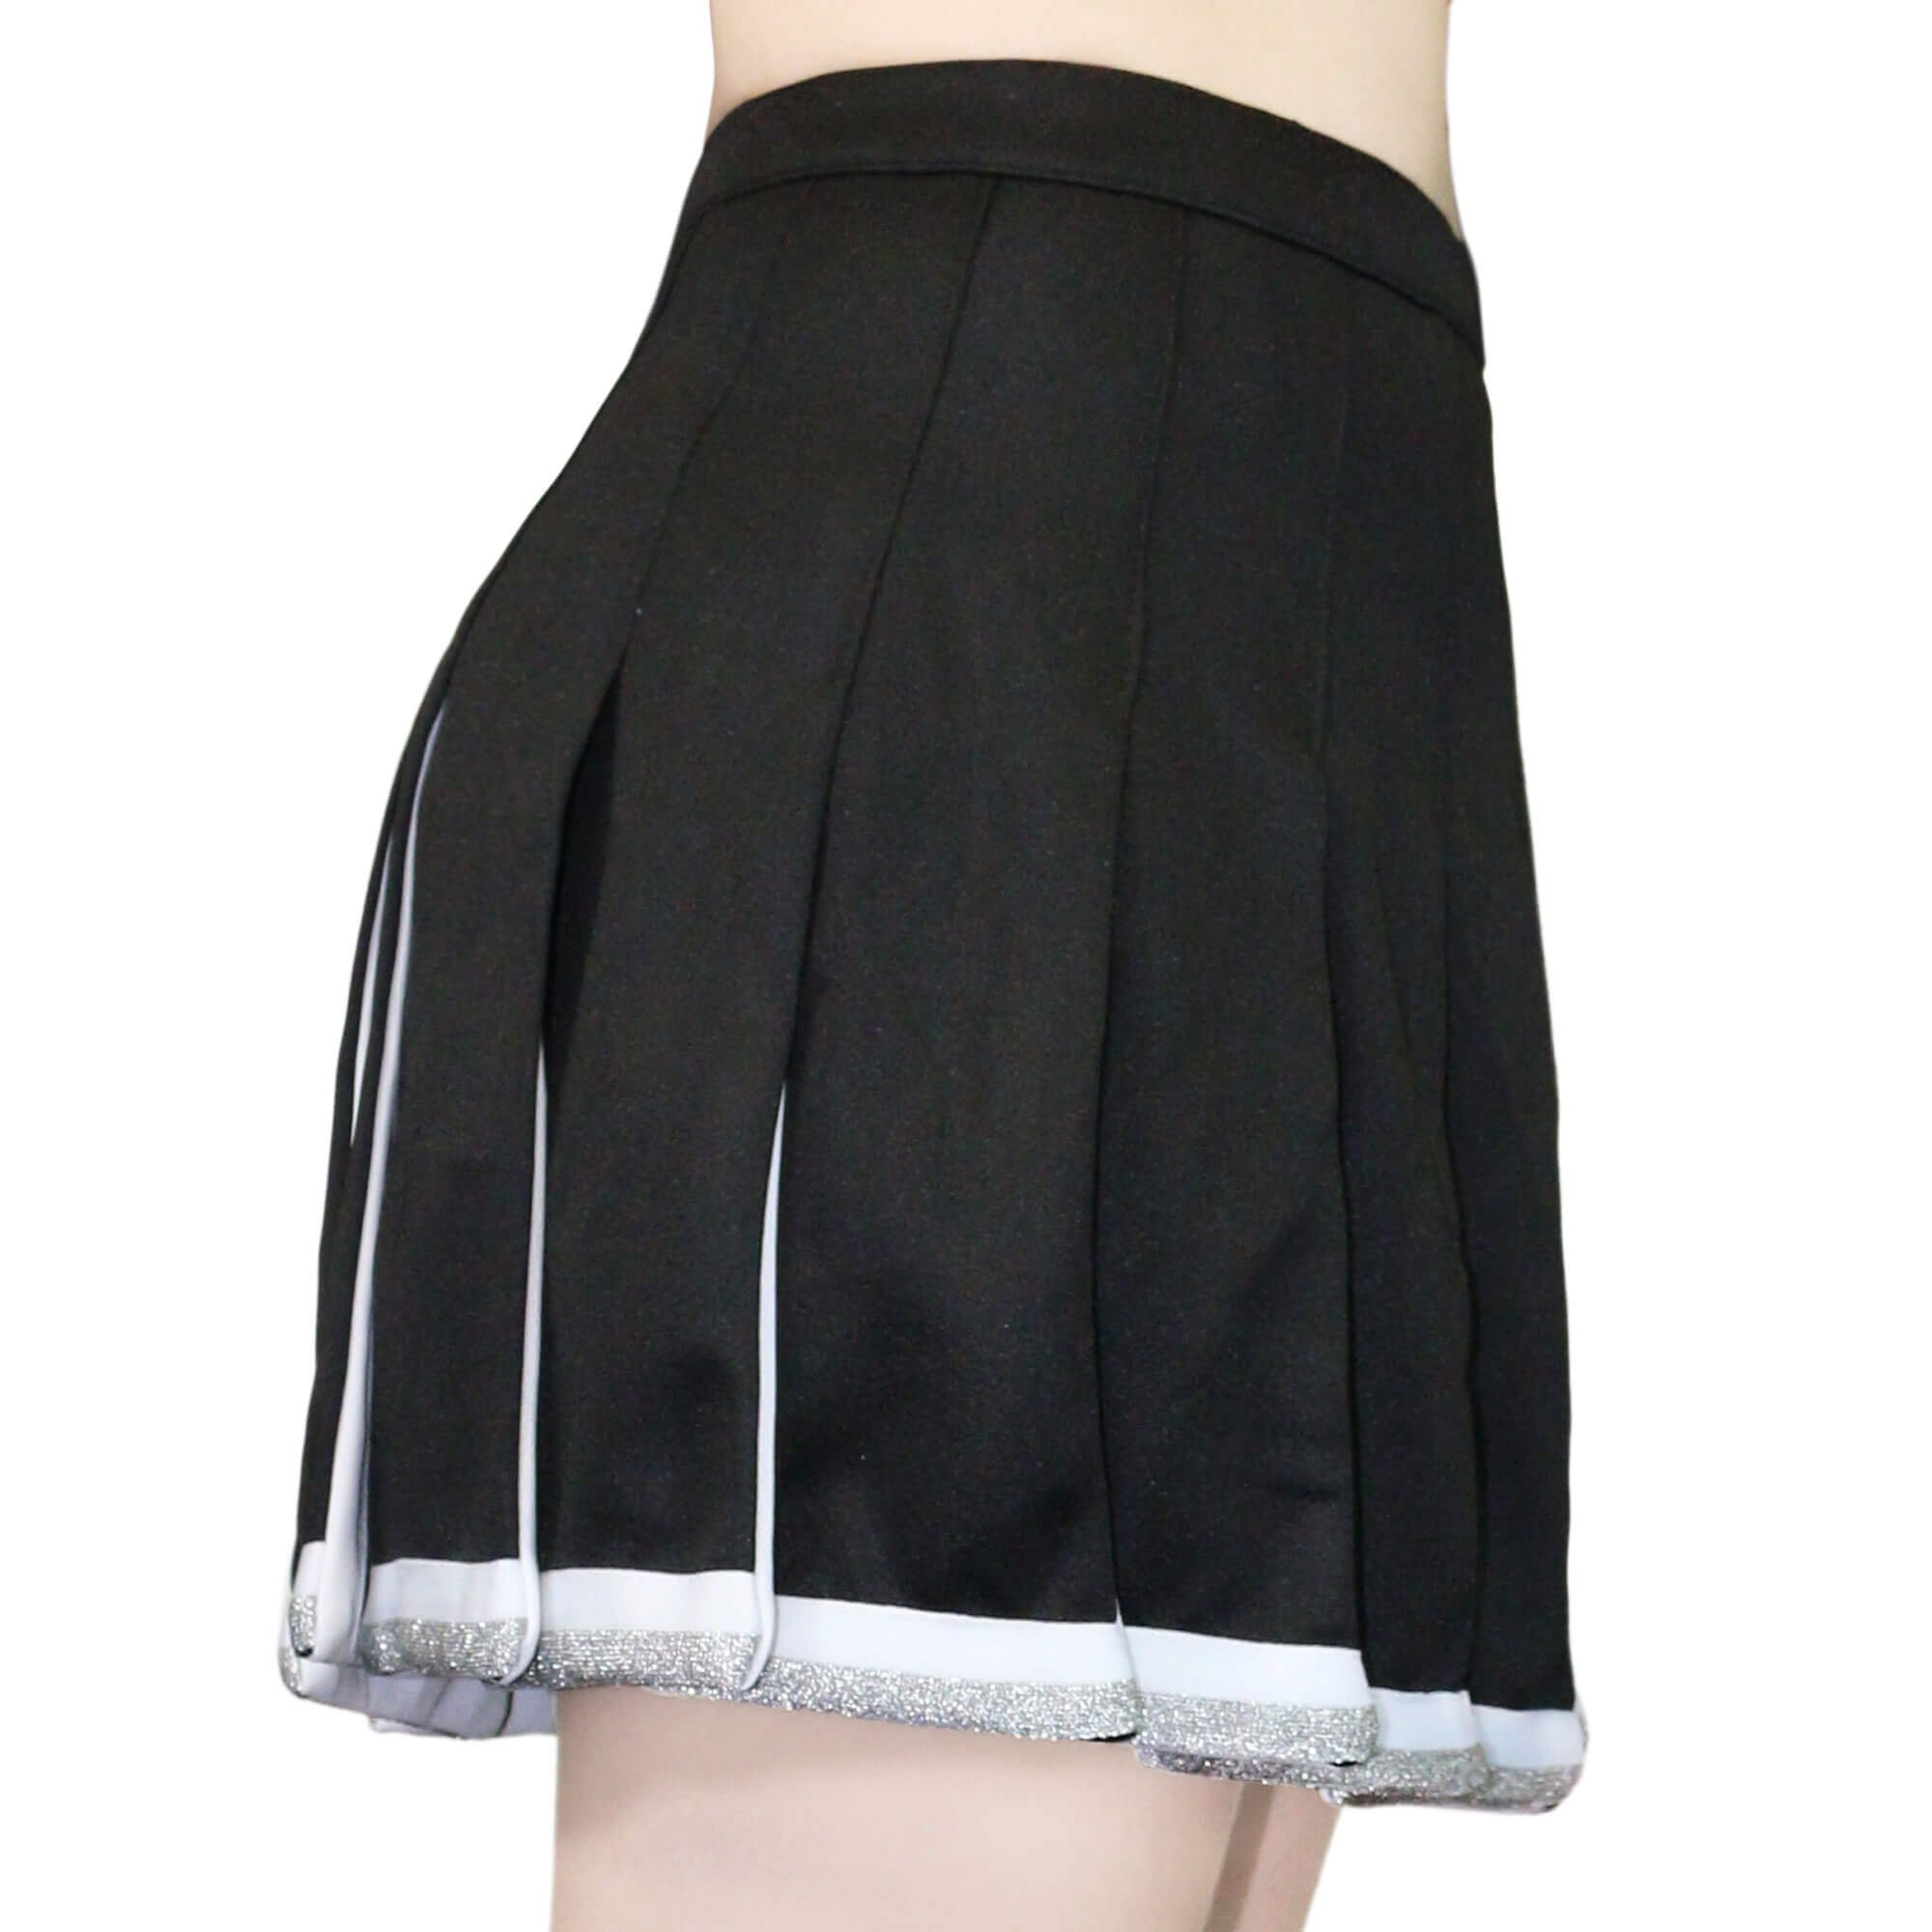 Danzcue Adult Cheerleading Pleated Skirt [DQCHS004A] - $28.49